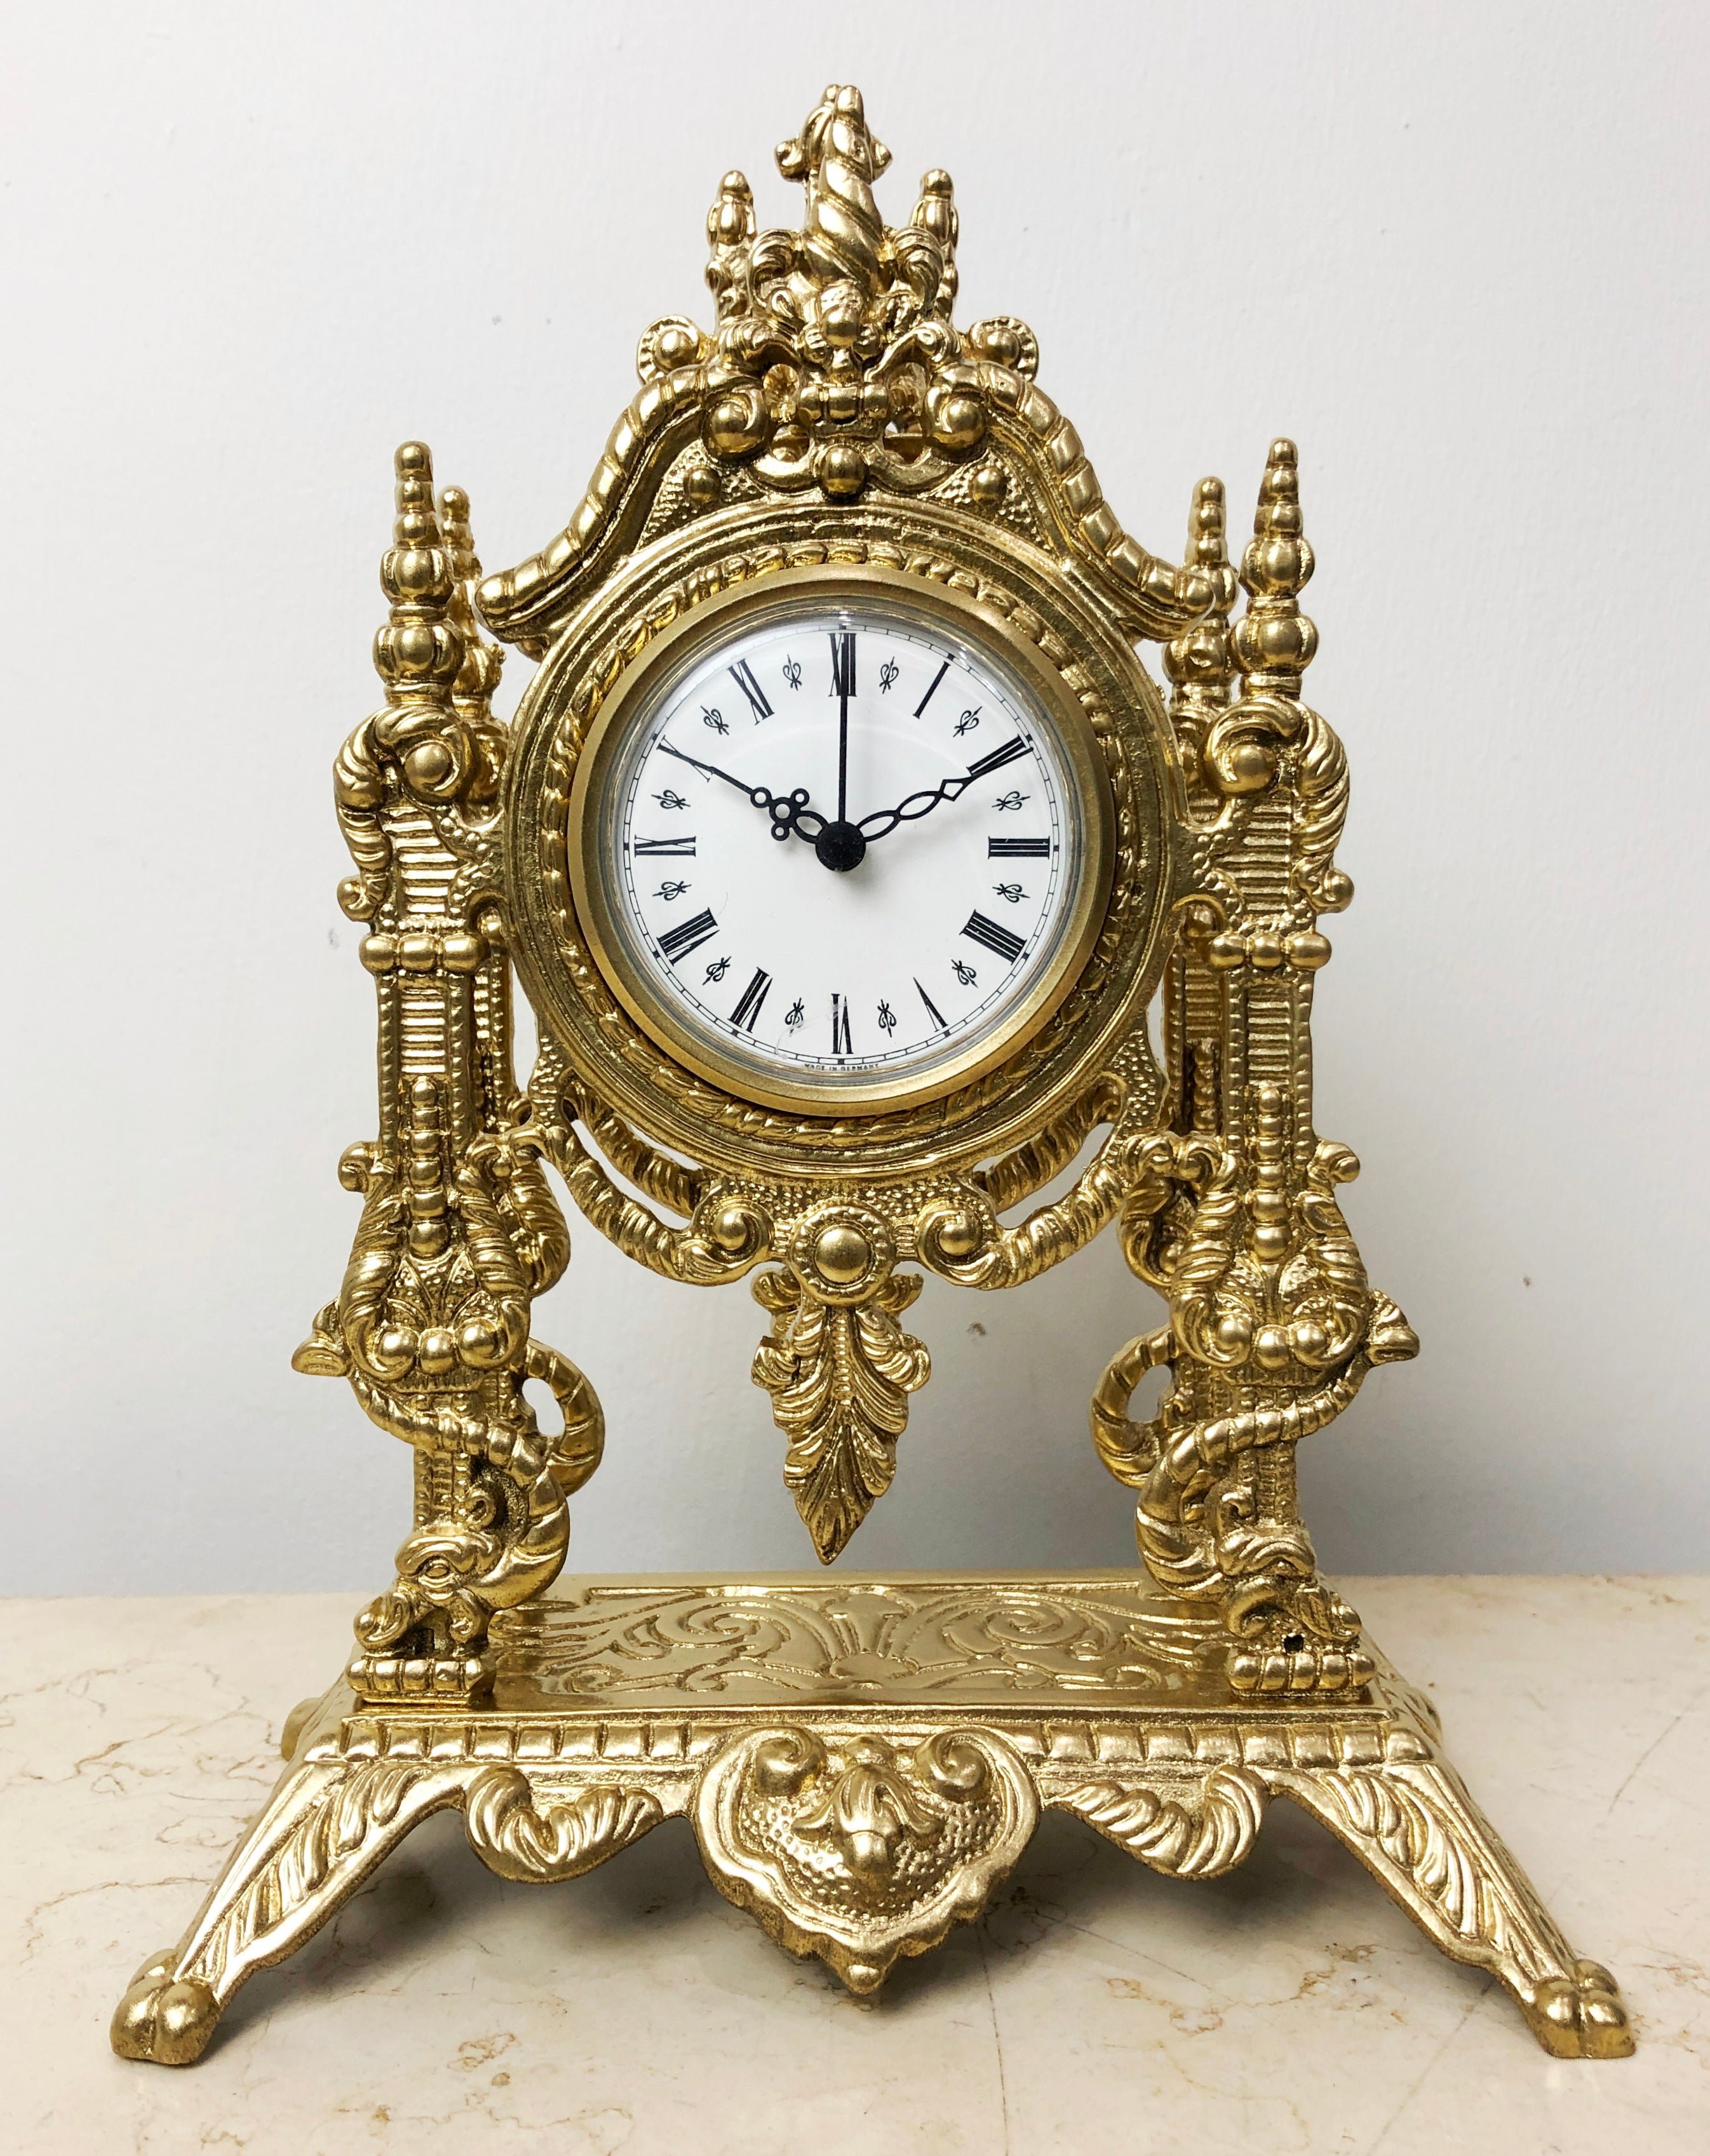 Vintage Figural Ornate Brass GERMAN Mantel Clock | eXibit collection